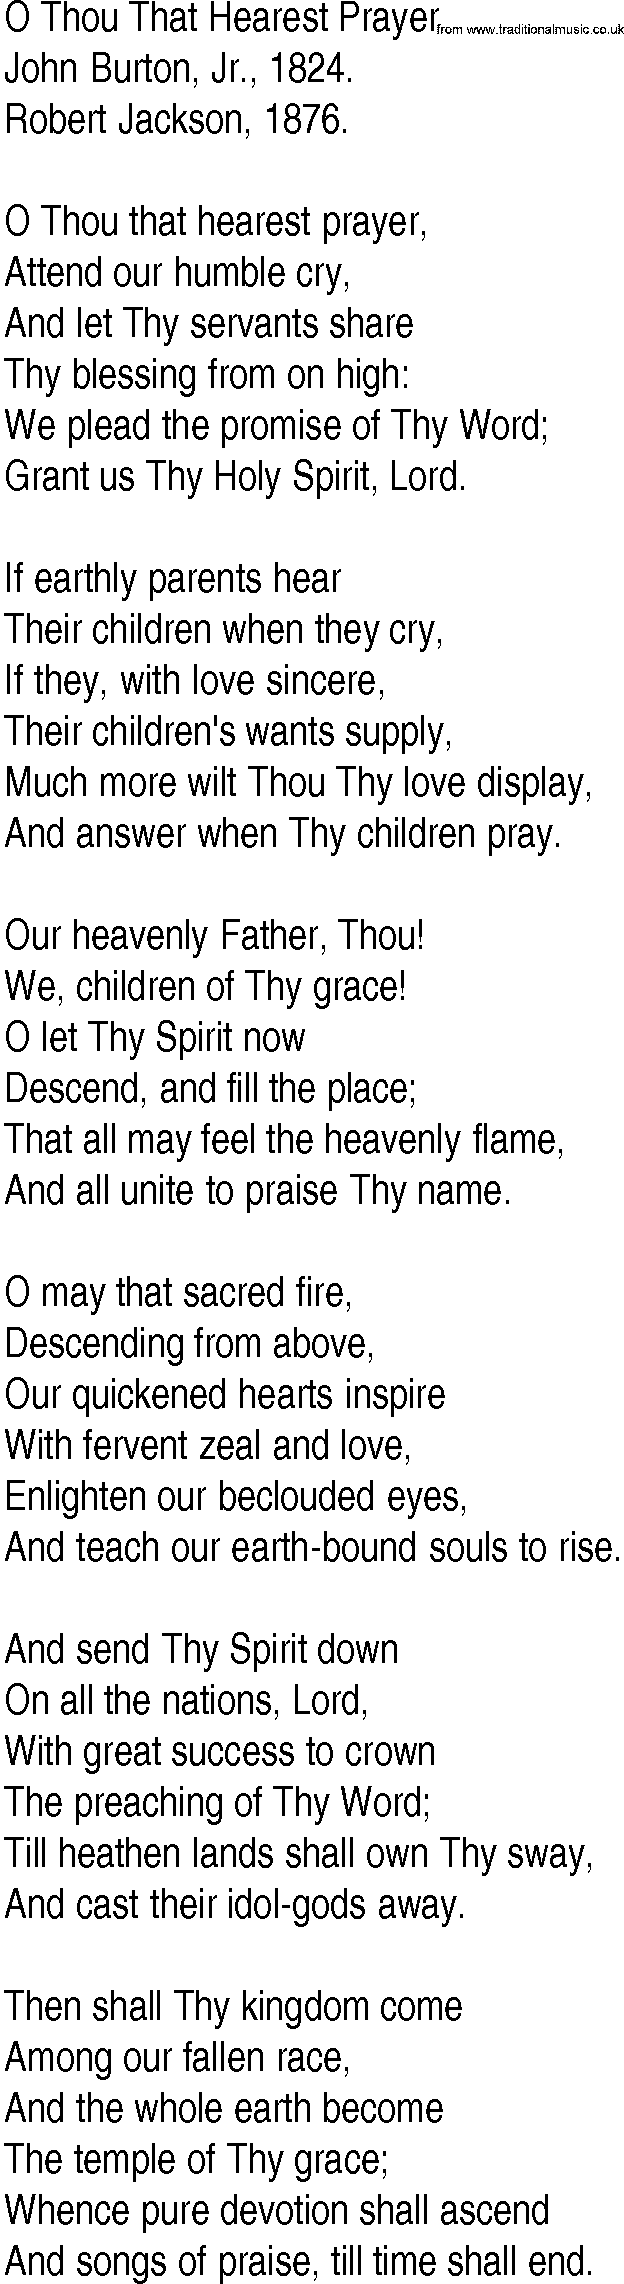 Hymn and Gospel Song: O Thou That Hearest Prayer by John Burton Jr lyrics